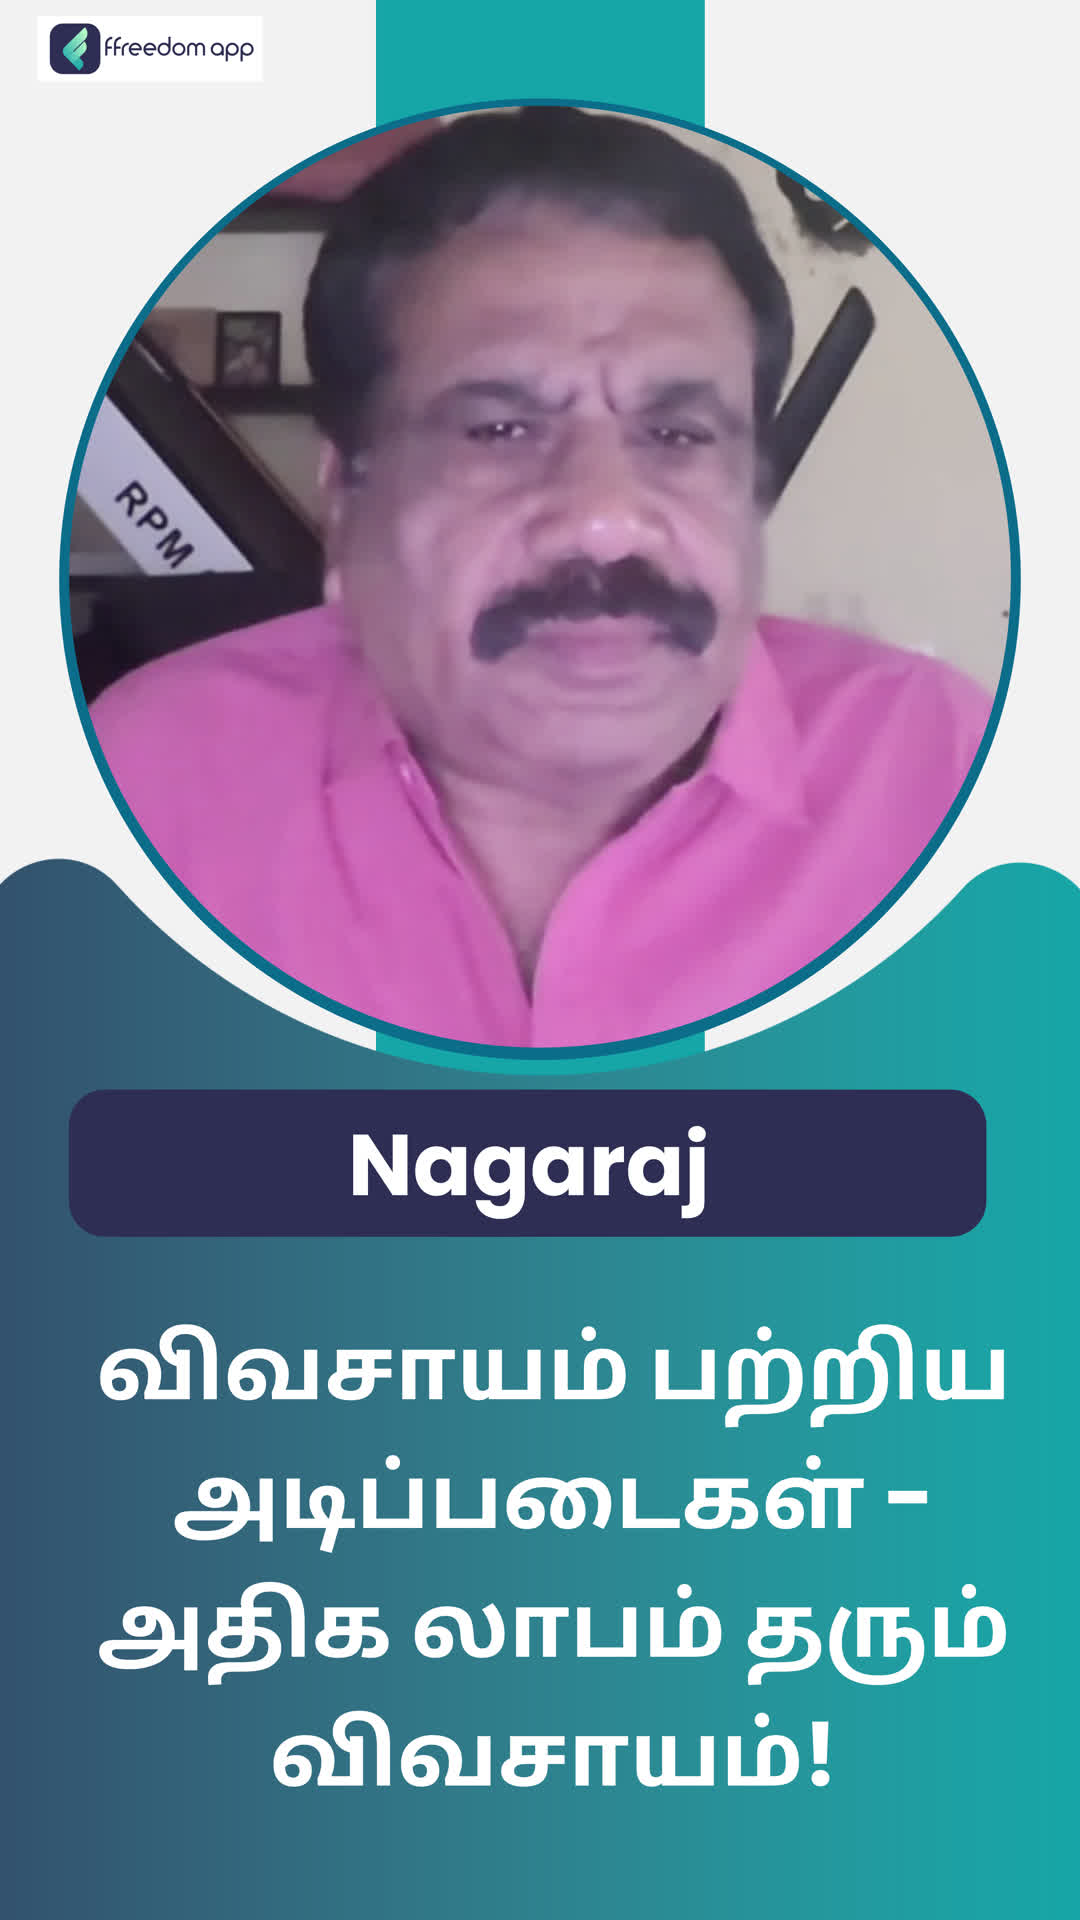 Nagaraj's Honest Review of ffreedom app - Coimbatore ,Tamil Nadu